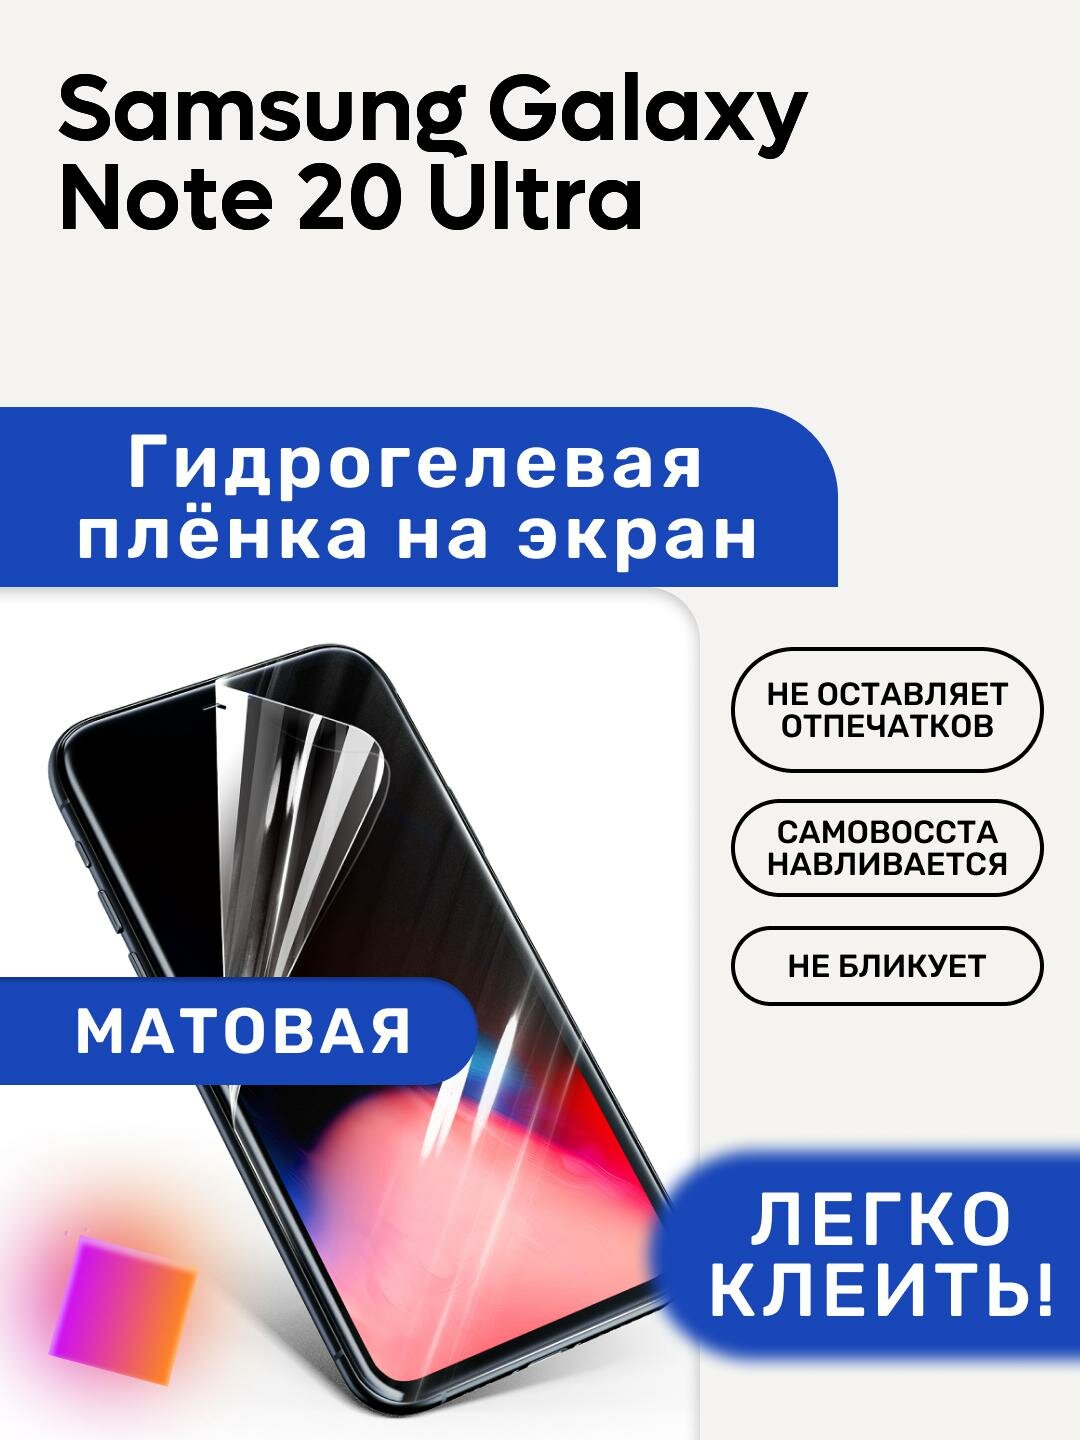 Матовая Гидрогелевая плёнка, полиуретановая, защита экрана Samsung Galaxy Note 20 Ultra